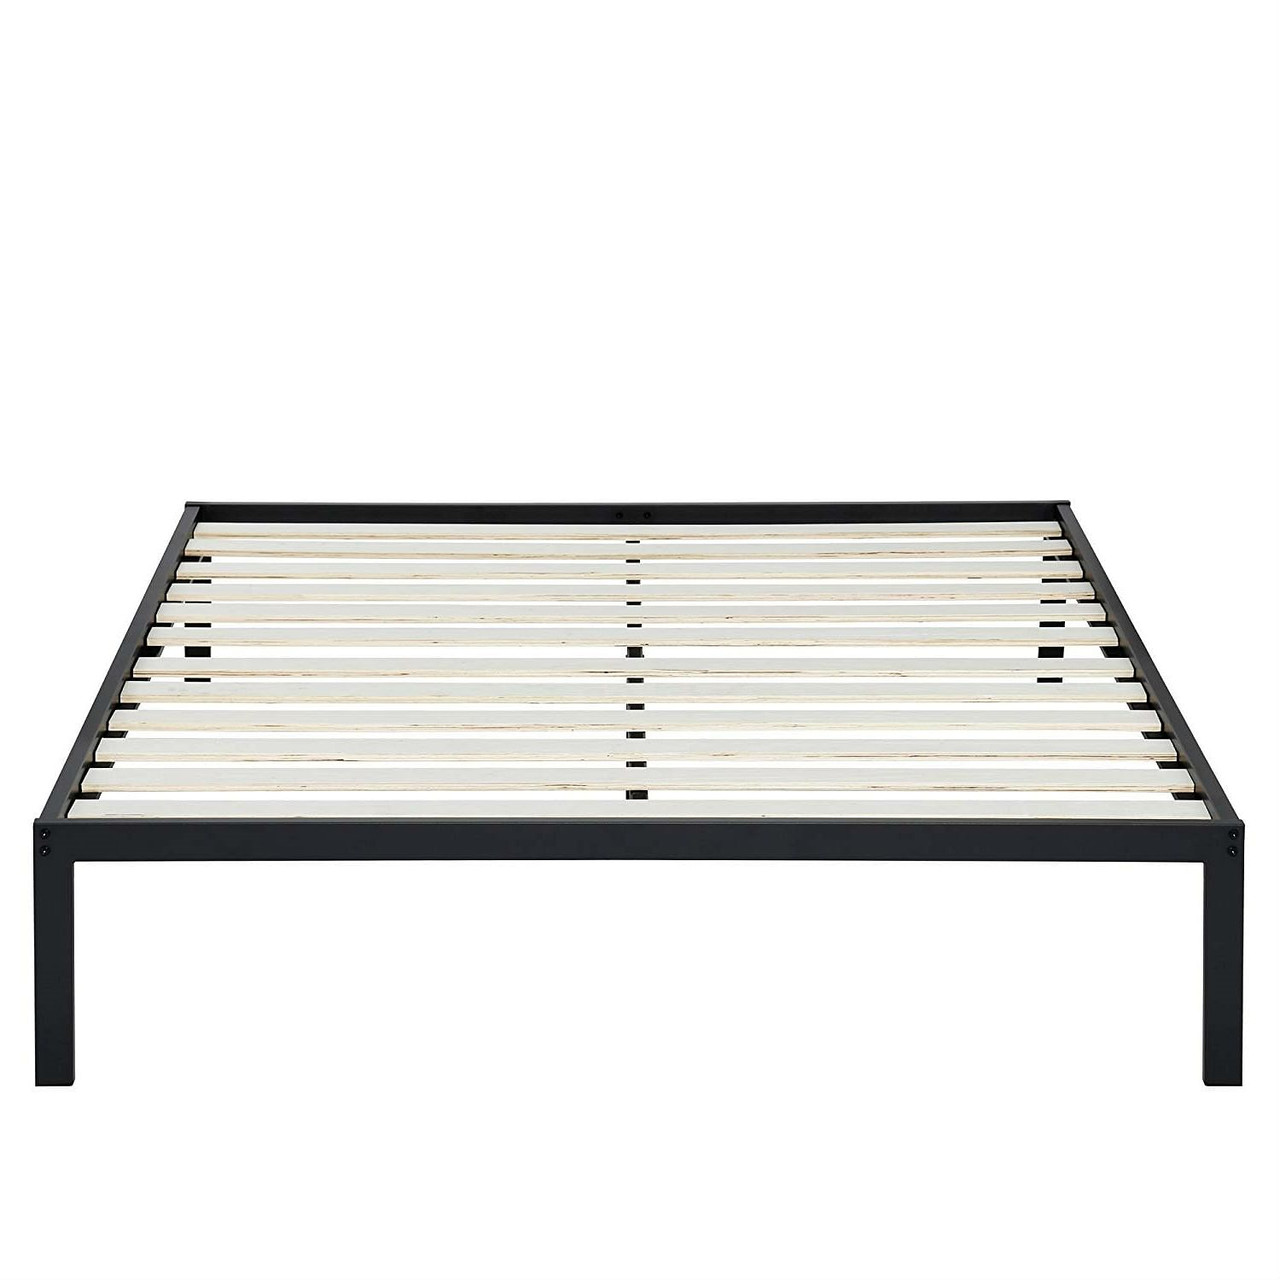 Queen size Steel Metal Platform Bed Frame with Wood Slats